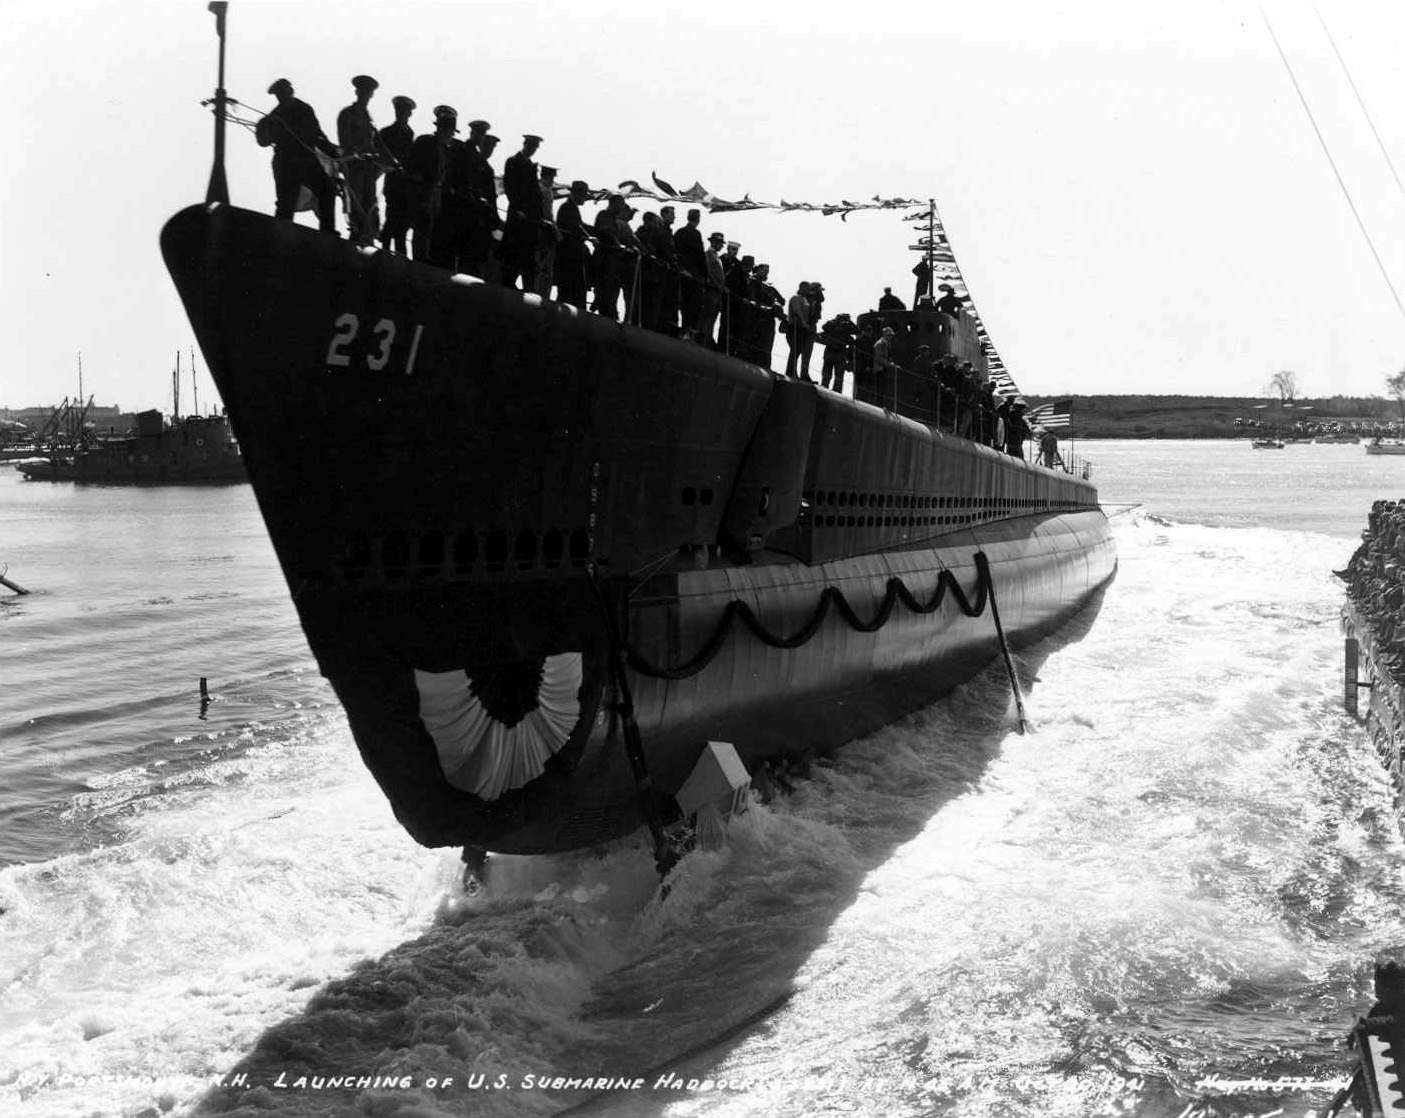 Launching ceremony of Haddock, Portsmouth Navy Yard, Kittery, Maine, United States, 20 Oct 1941